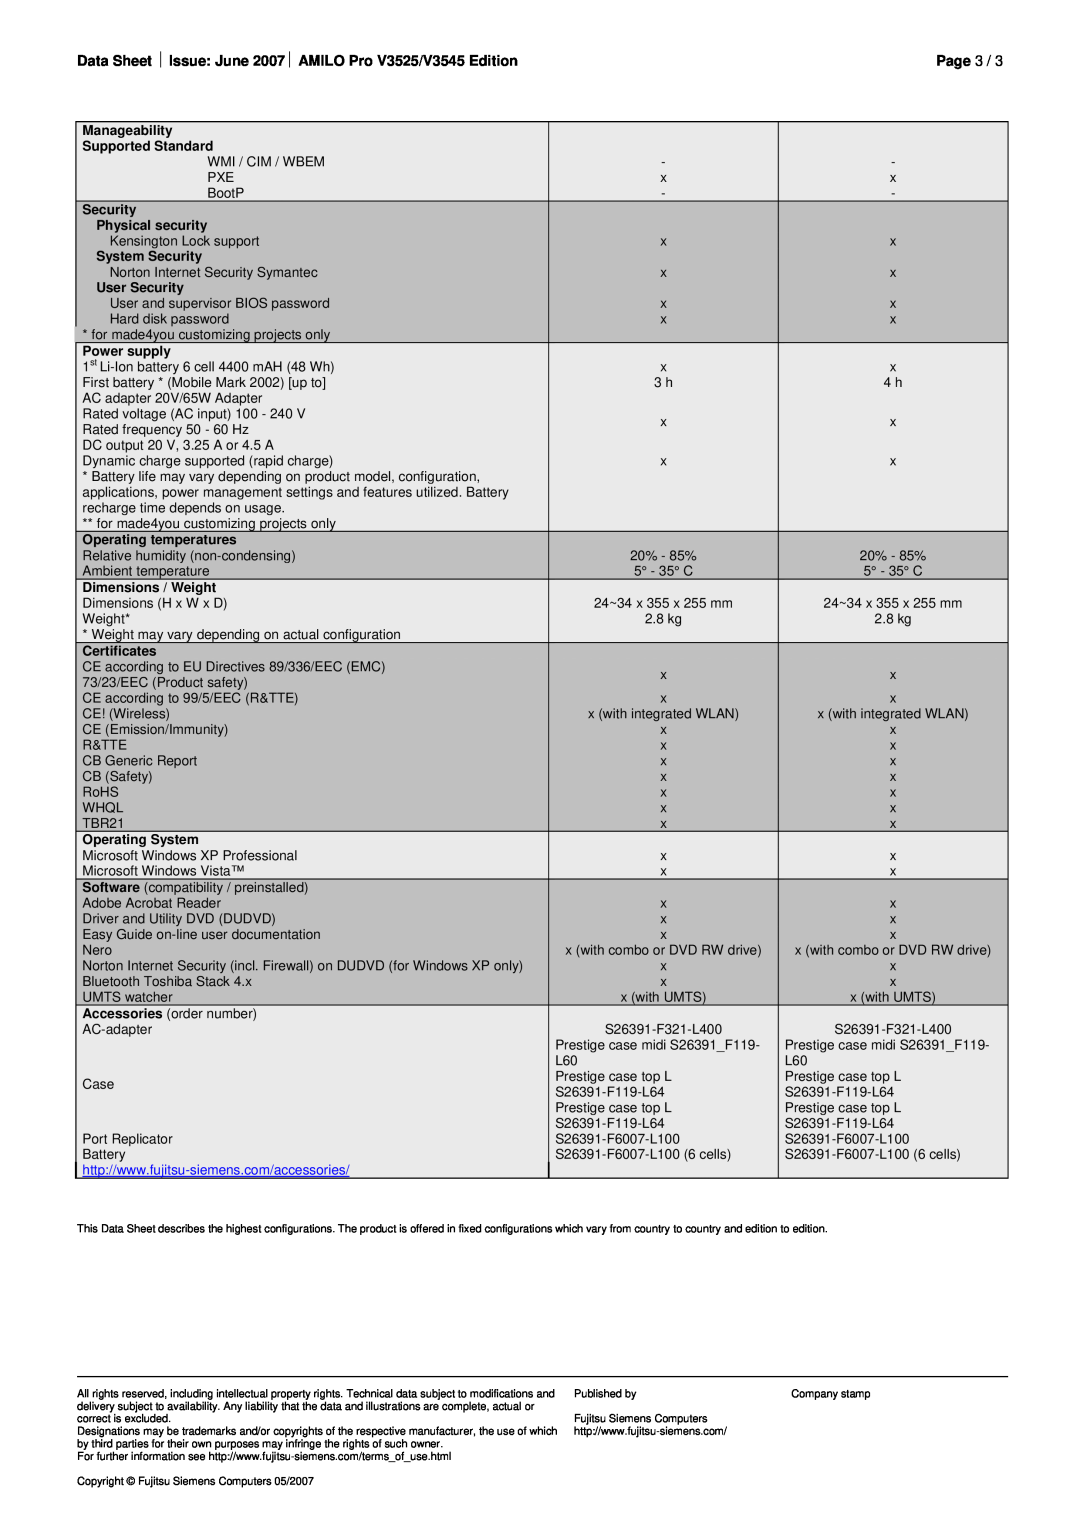 Fujitsu Siemens Computers Laptop PC manual Data Sheet Issue June 2007 AMILO Pro V3525/V3545 Edition, Page, Manageability 